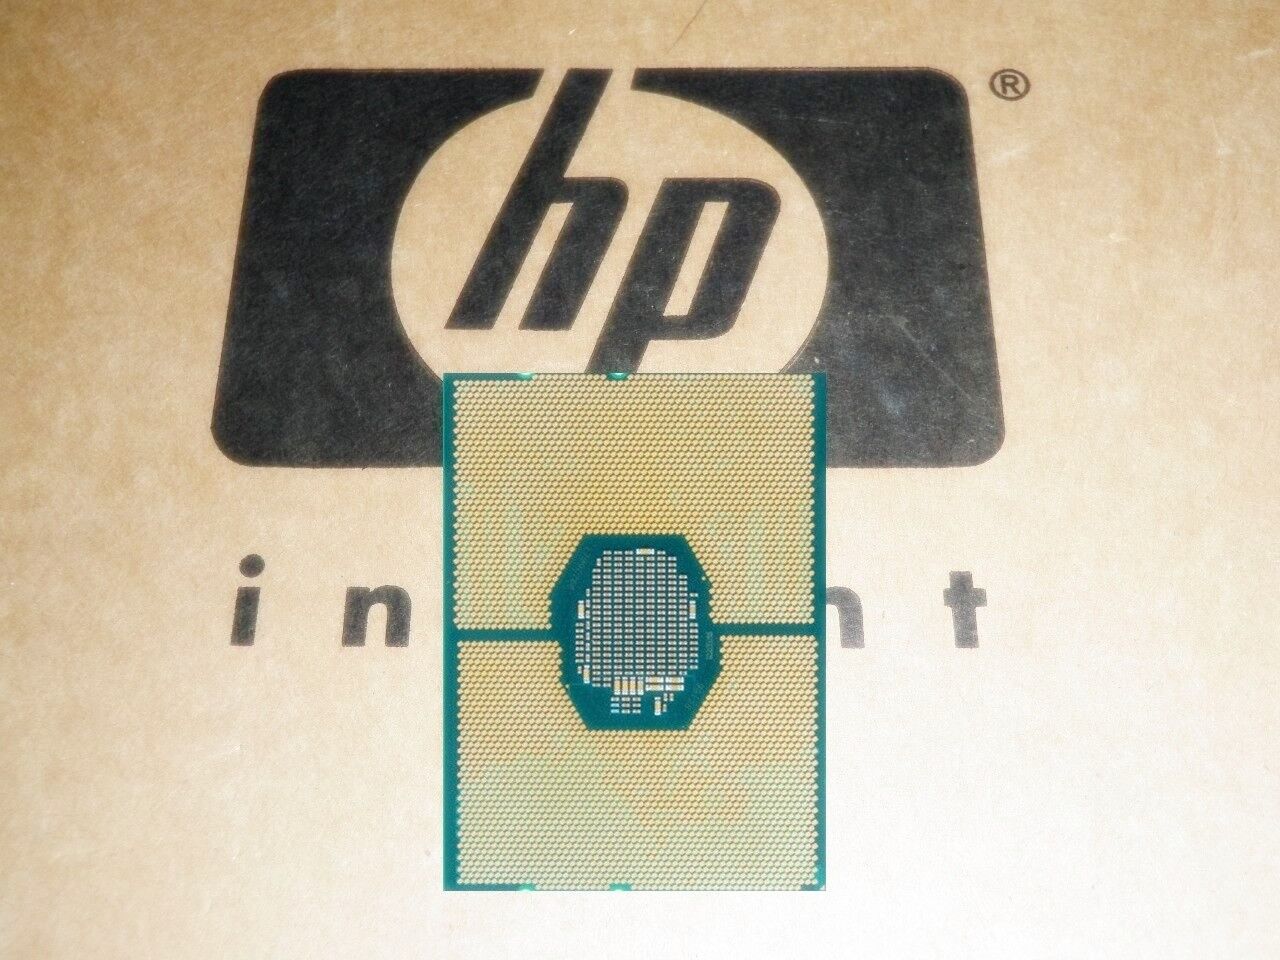 L58104-003 NEW HP 2.6Ghz Xeon-Gold 6240 Processor for Z6 G4 Z8 G4 Workstation